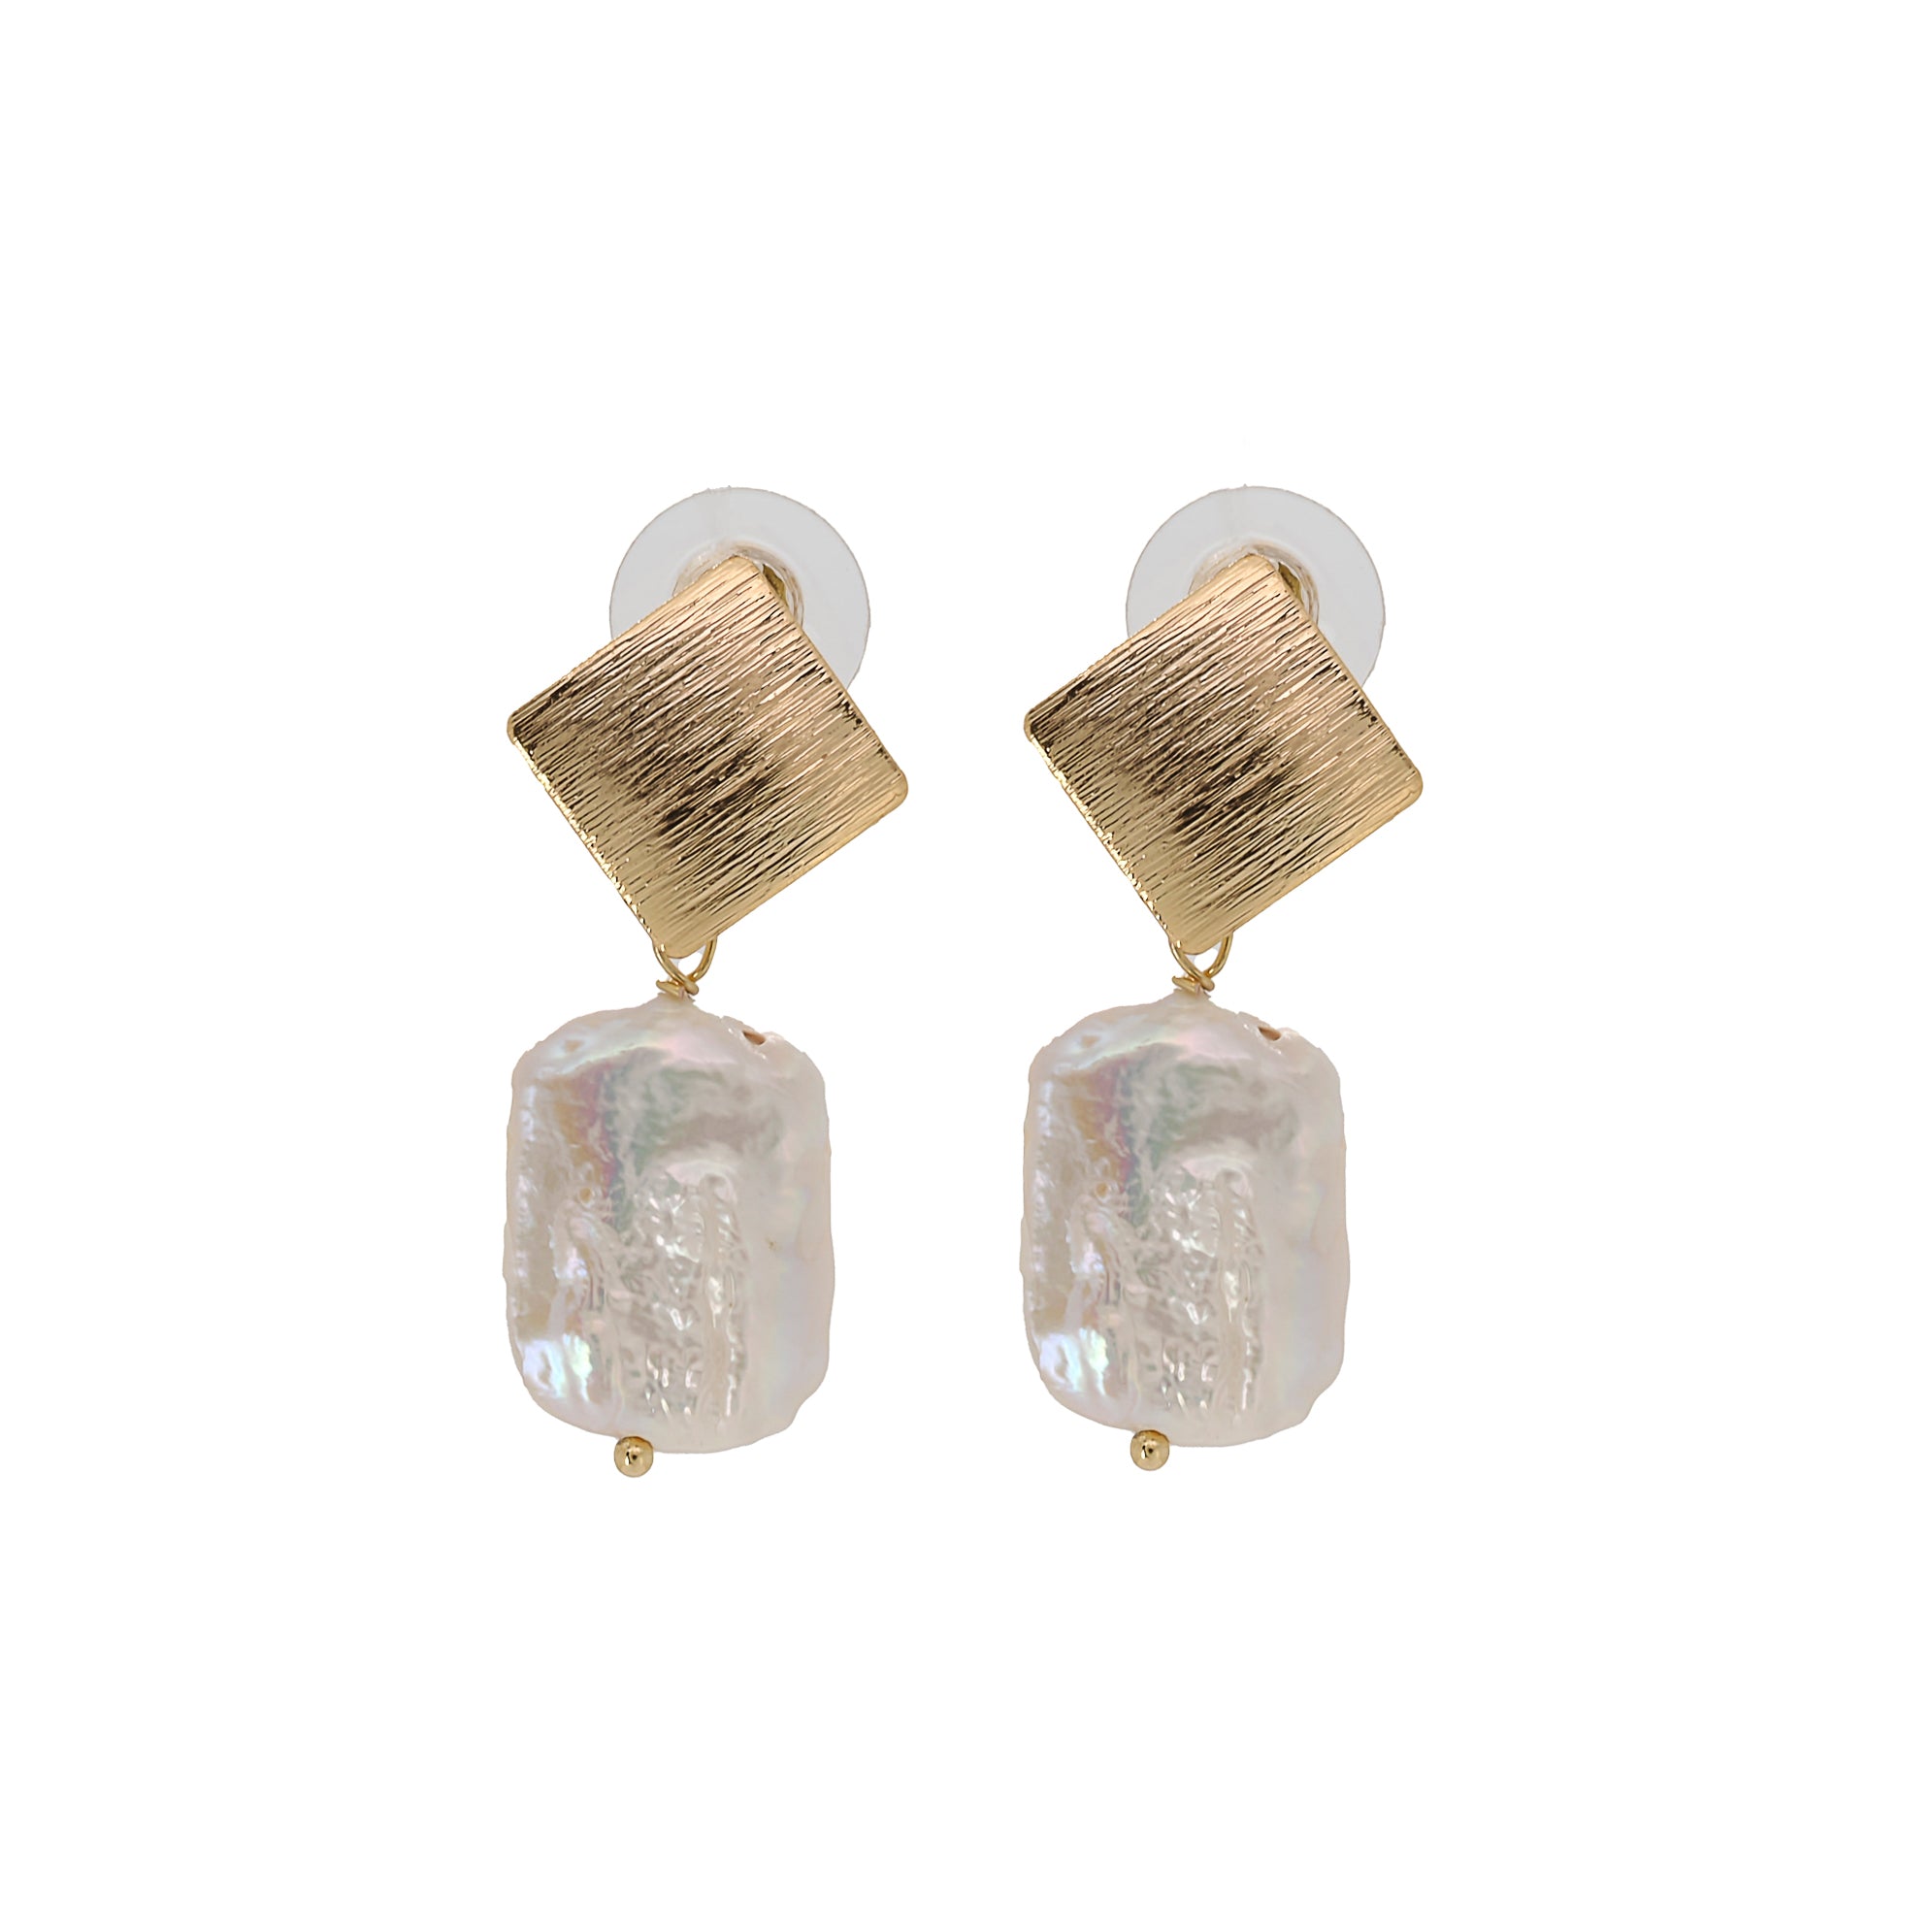 Cleopatra Pearl Earrings: Allure & Elegance, Handmade in the USA.